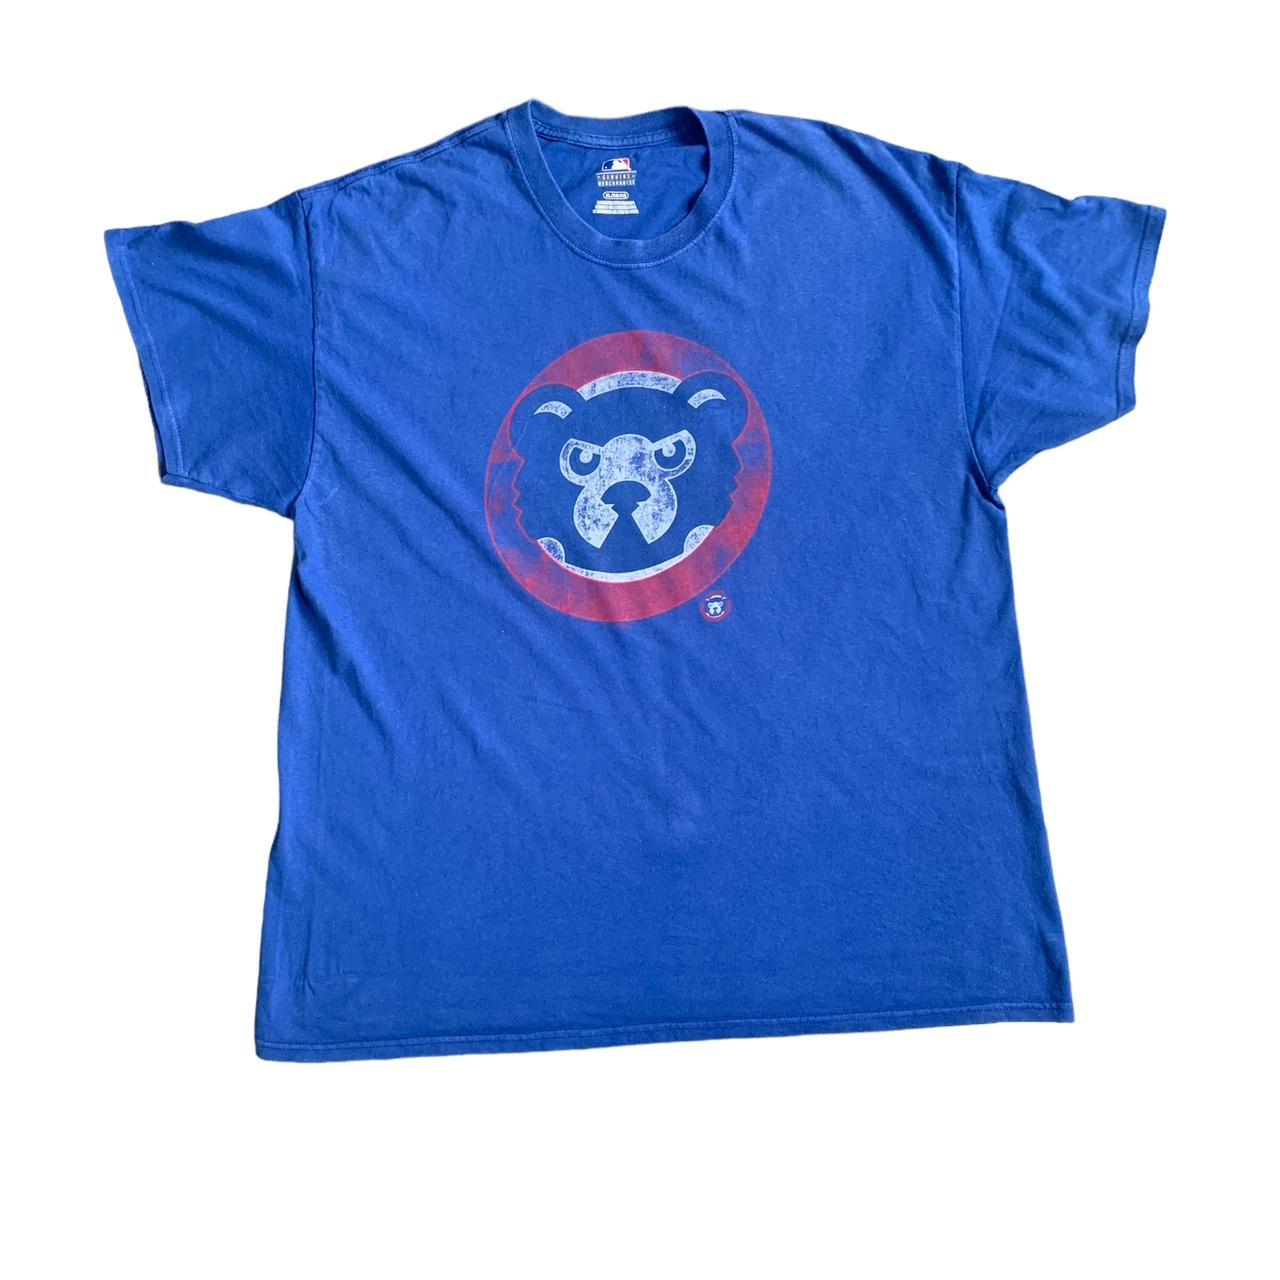 ⭐️Official Merchandise - MLB Chicago Cubs - Depop